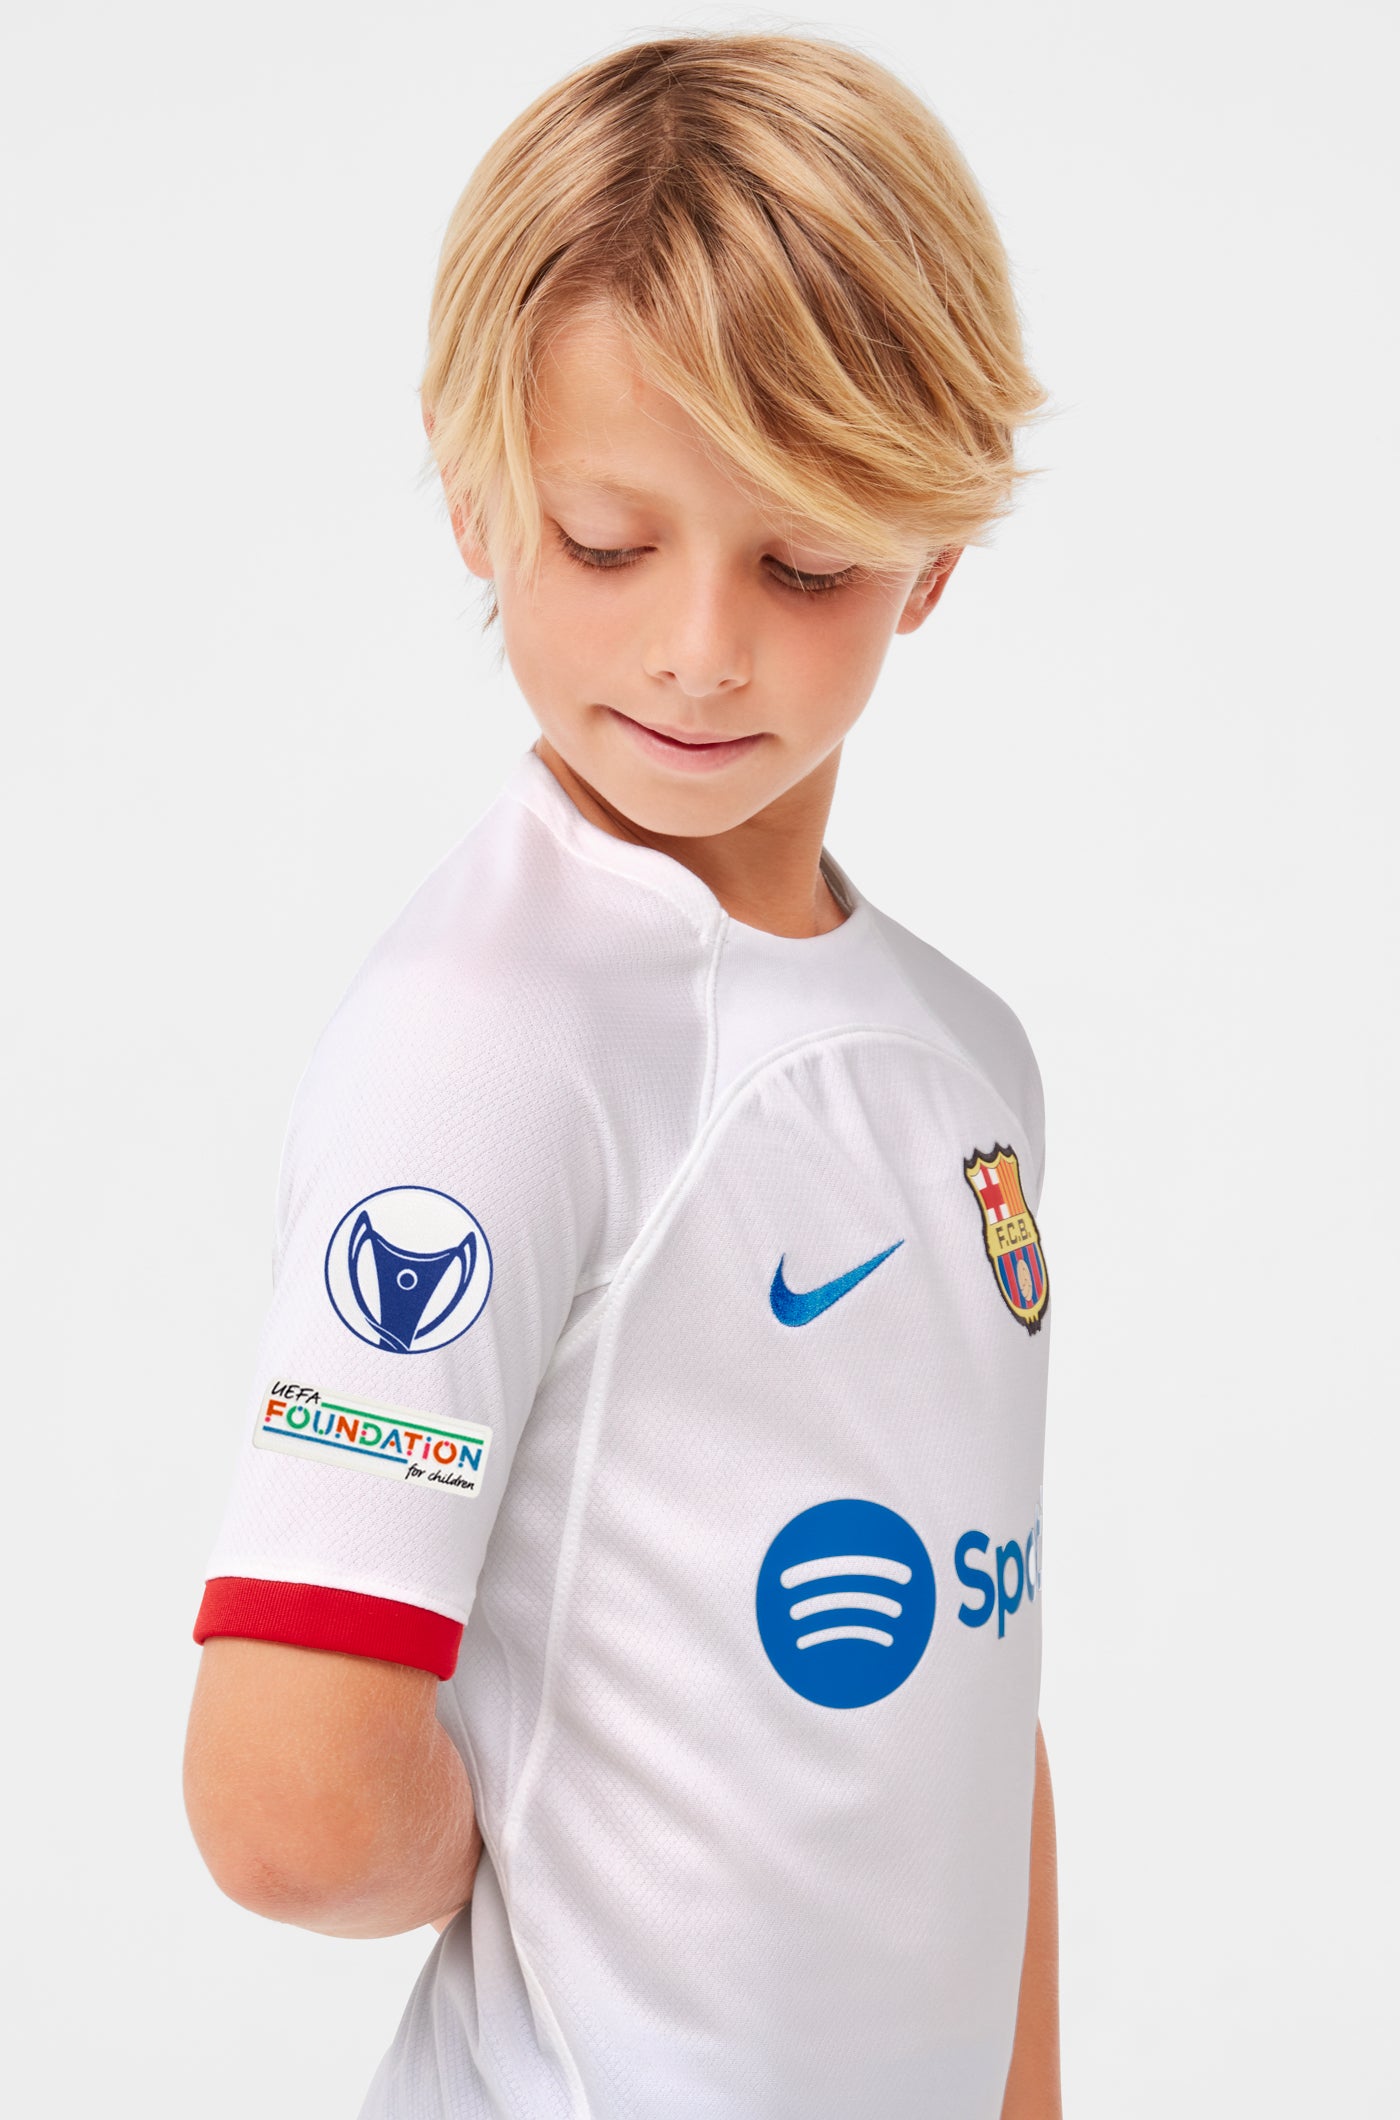 UWCL FC Barcelona away shirt 23/24 – Junior  - JANA